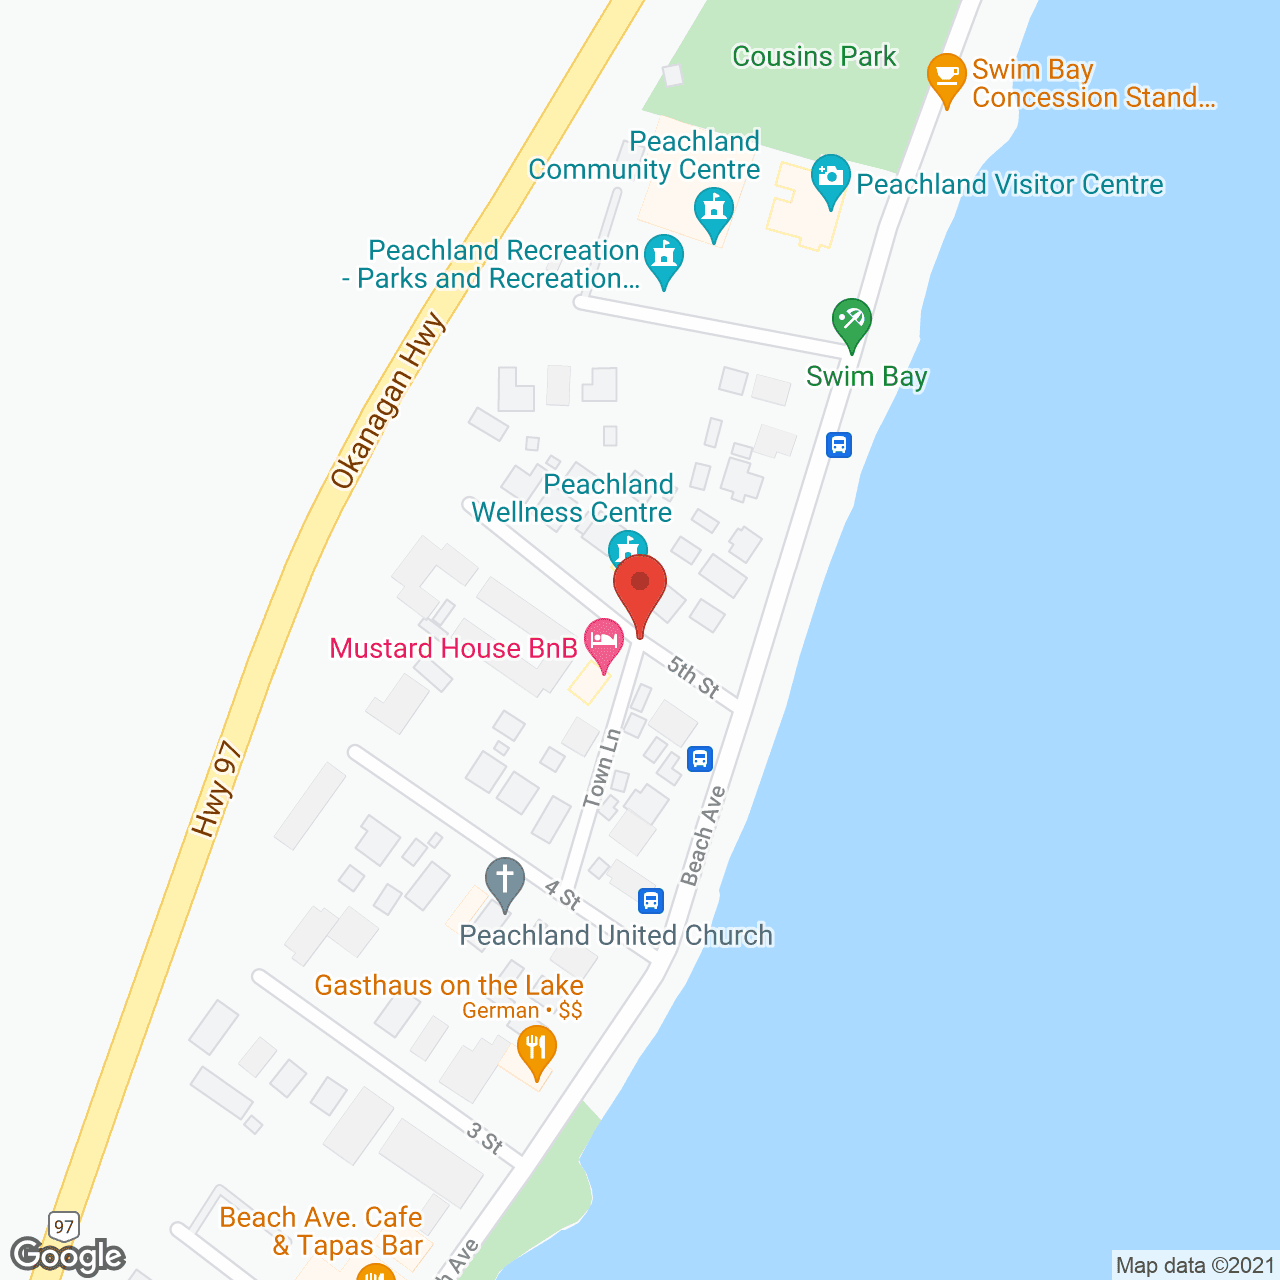 Alexander Court in google map